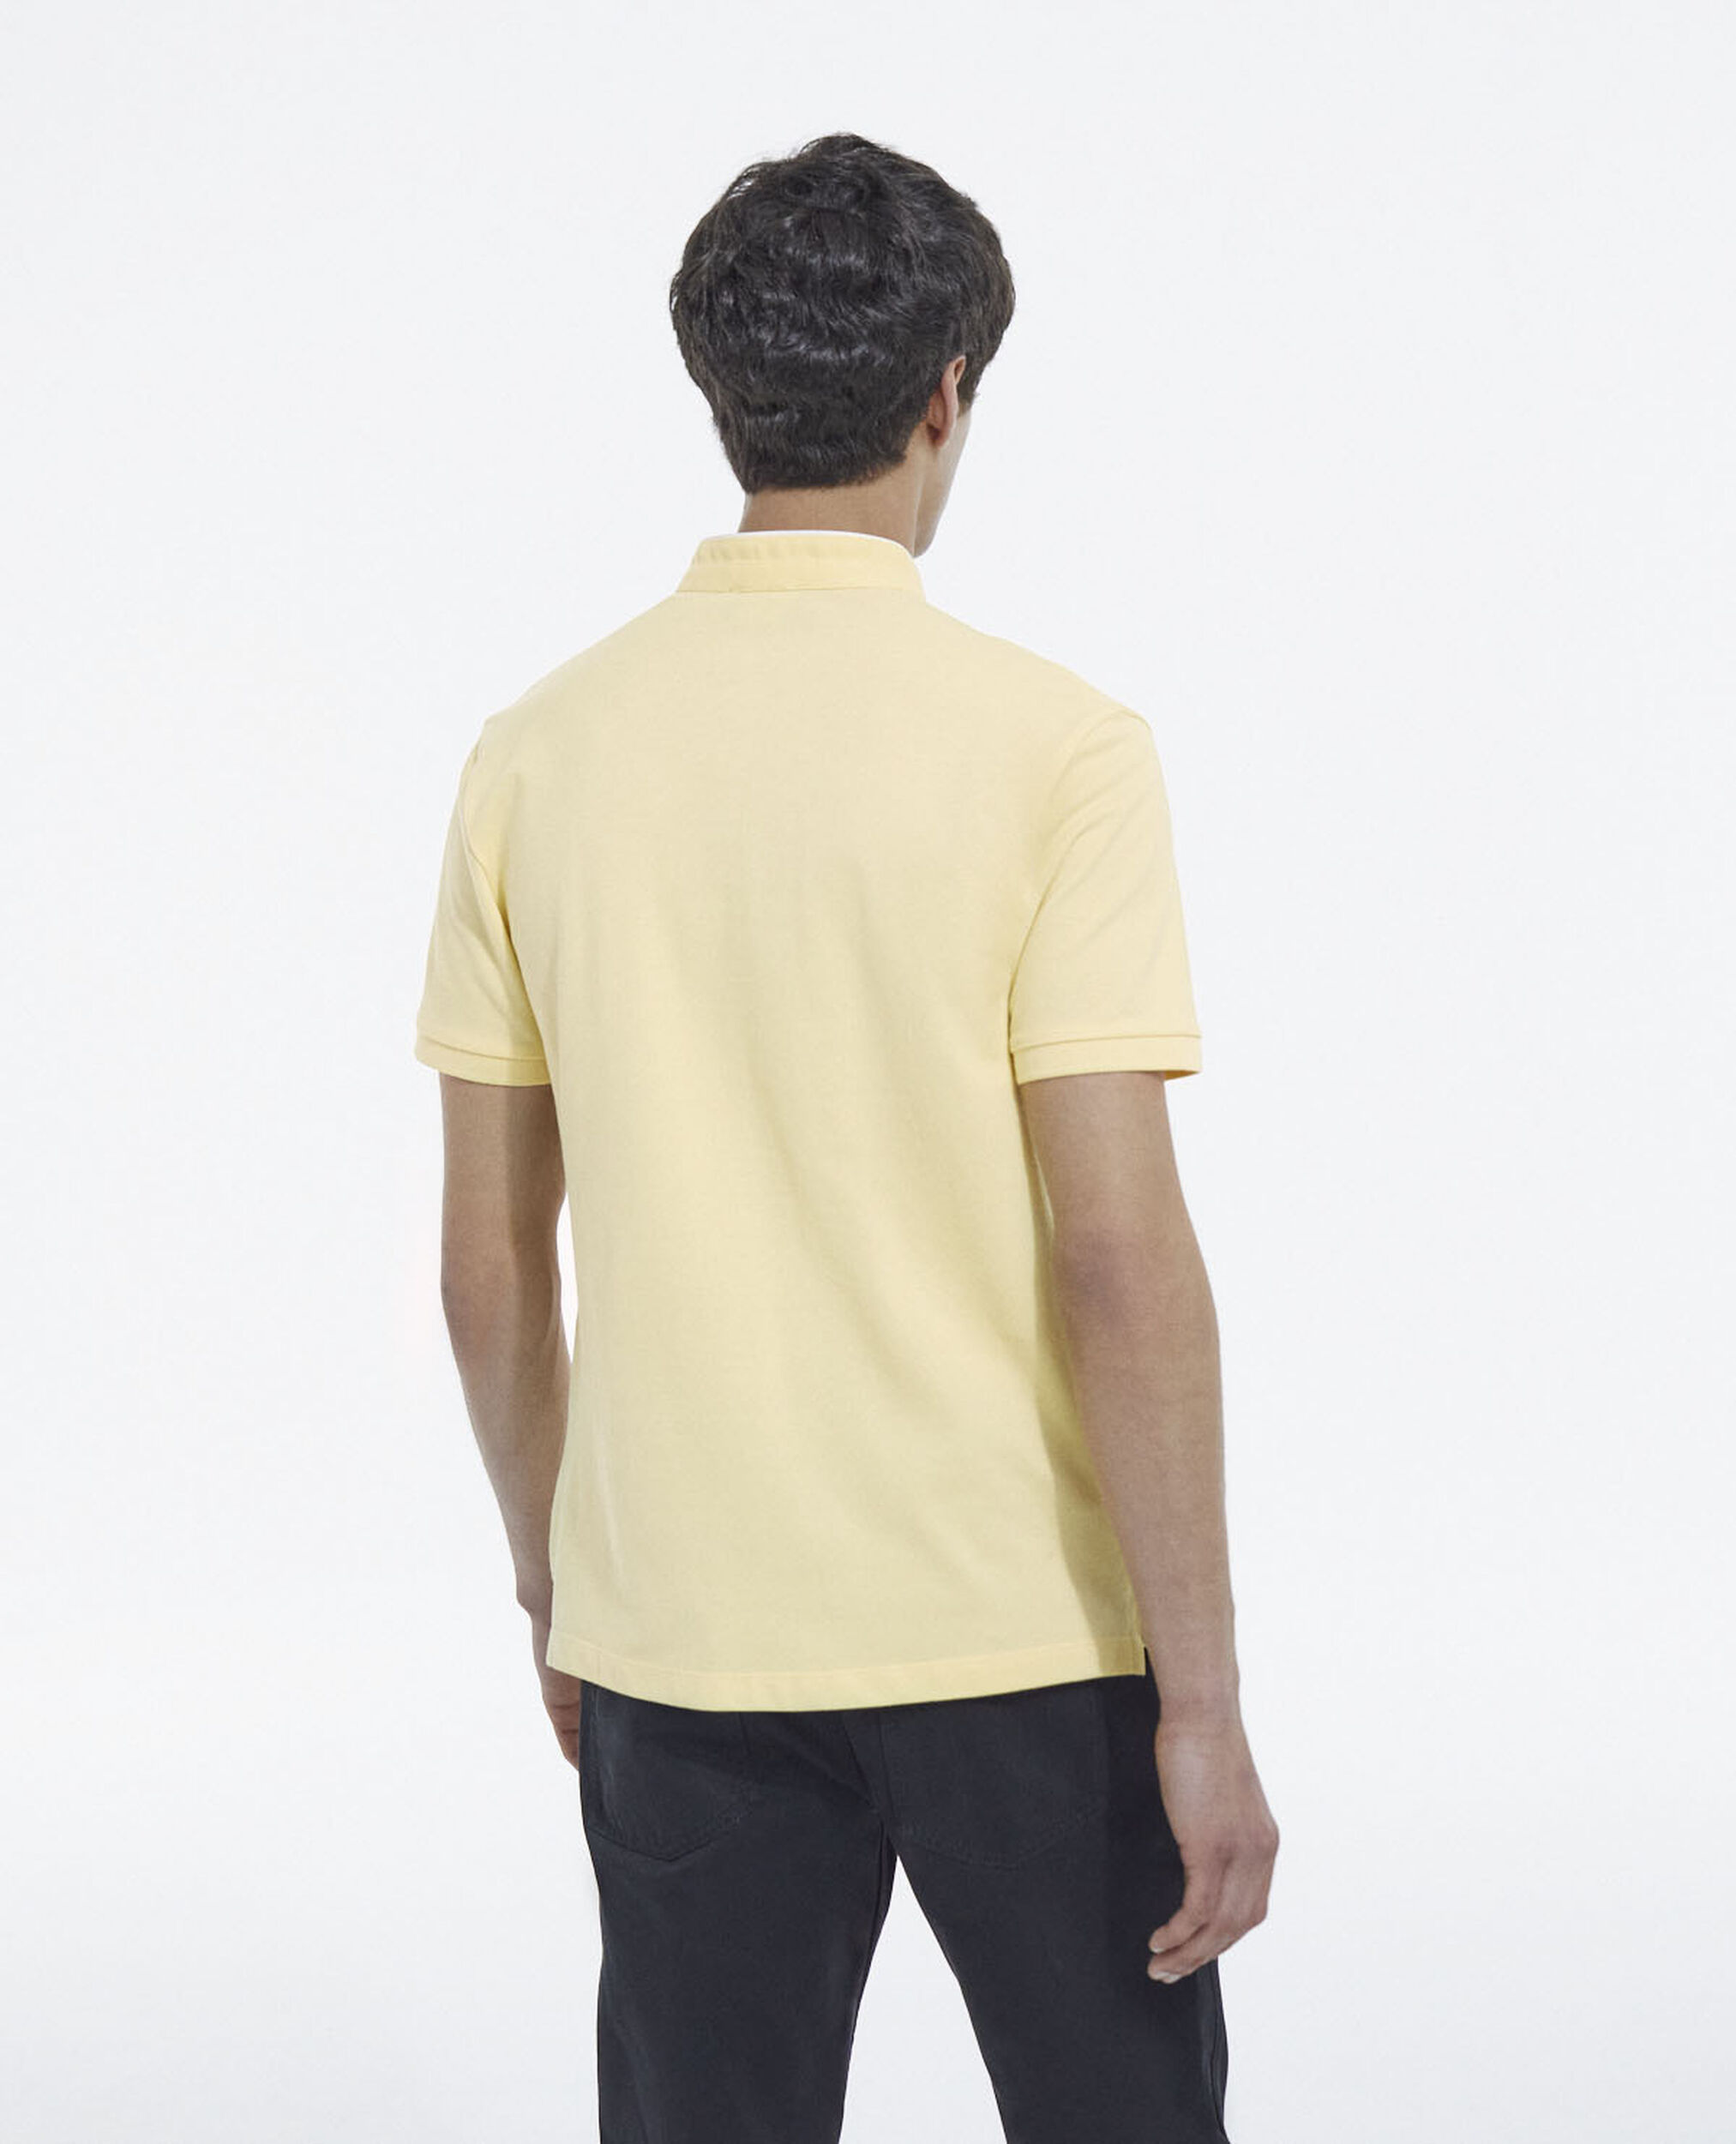 Camisa polo amarilla algodón Mao bordado, VERY LT YELLOW/BLANC, hi-res image number null